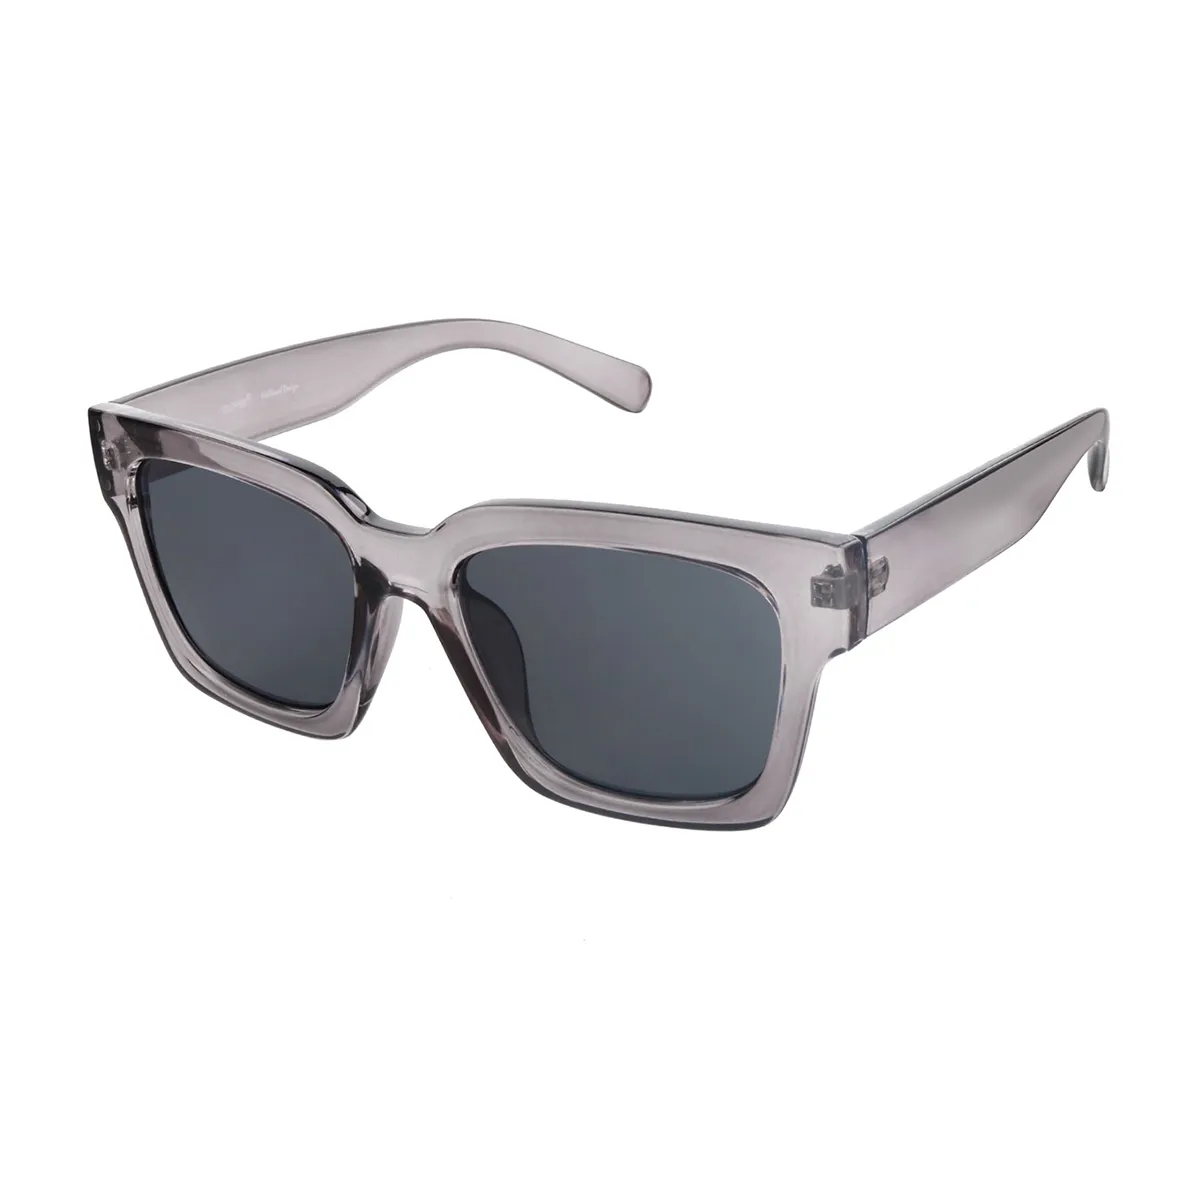 Jordi - Square Transparent-Gray Sunglasses for Women